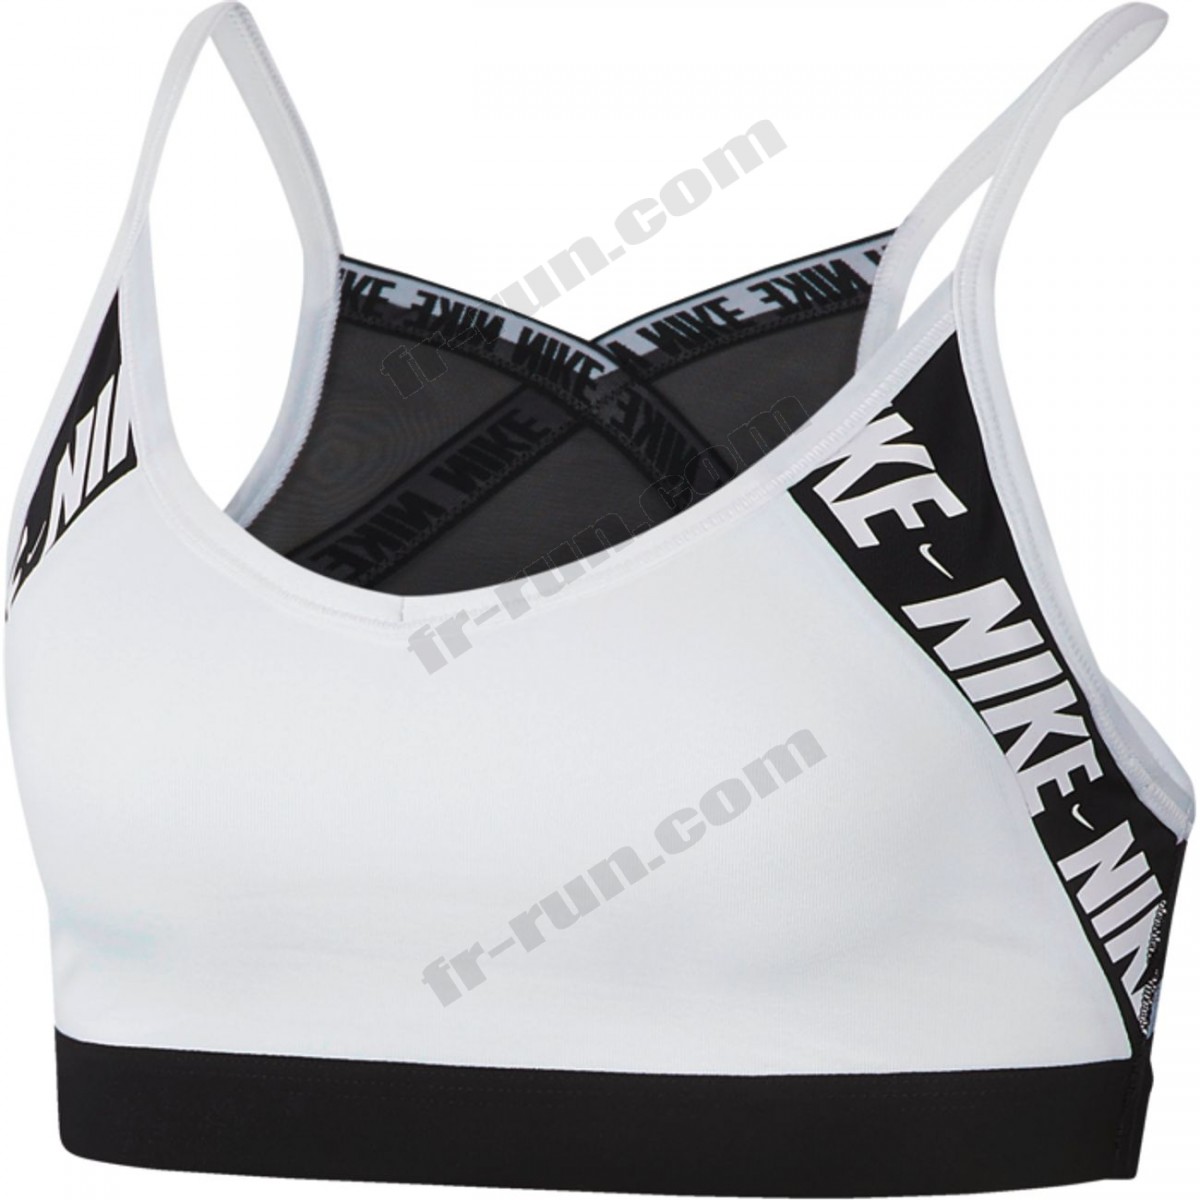 Nike/BRASSIERE Fitness femme NIKE INDY LOGO √ Nouveau style √ Soldes - -0